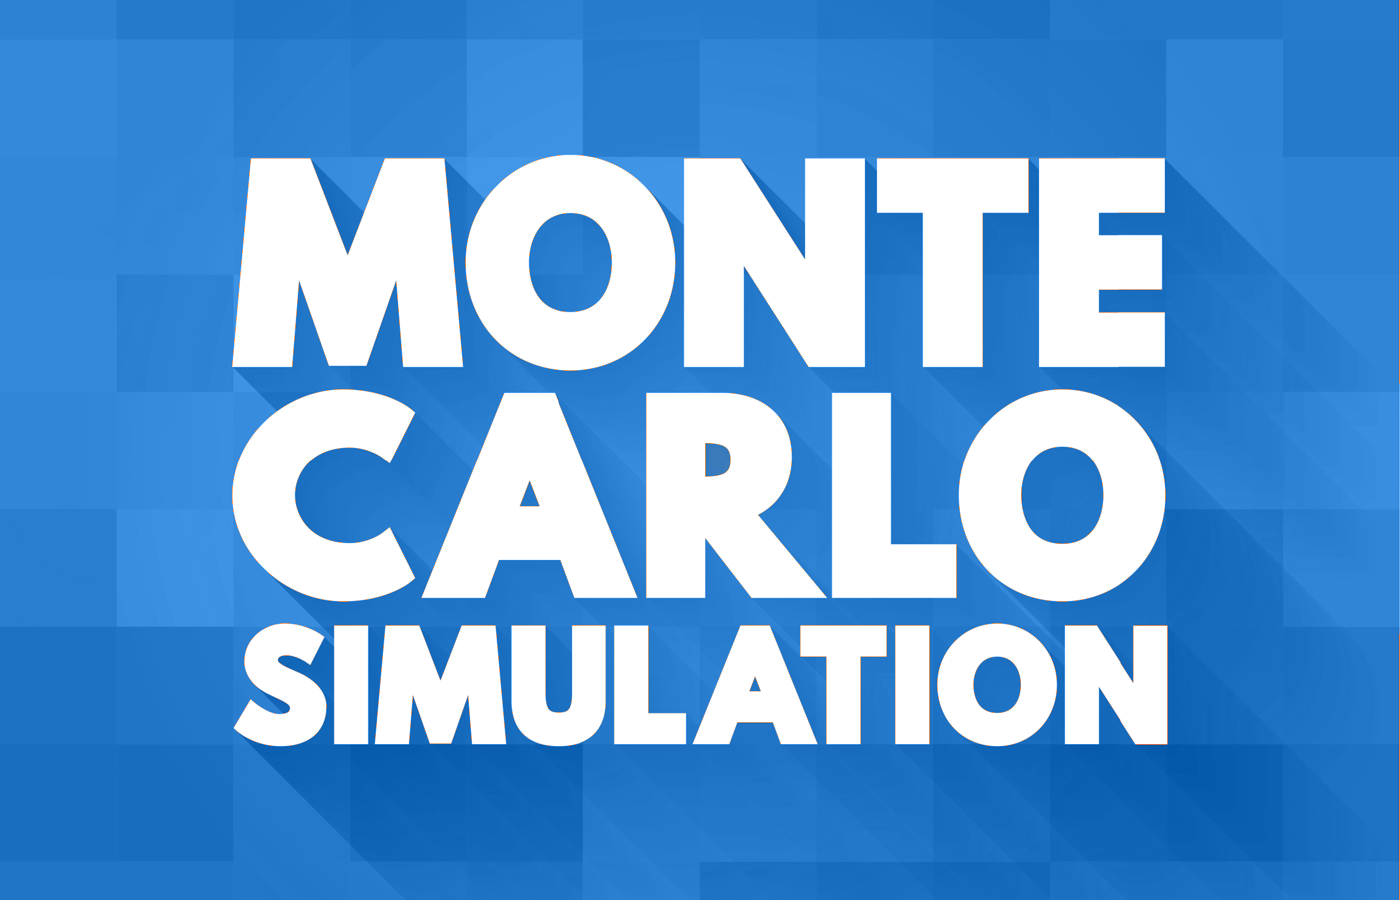 Monte Carlo Simulation inscription on a blue background.